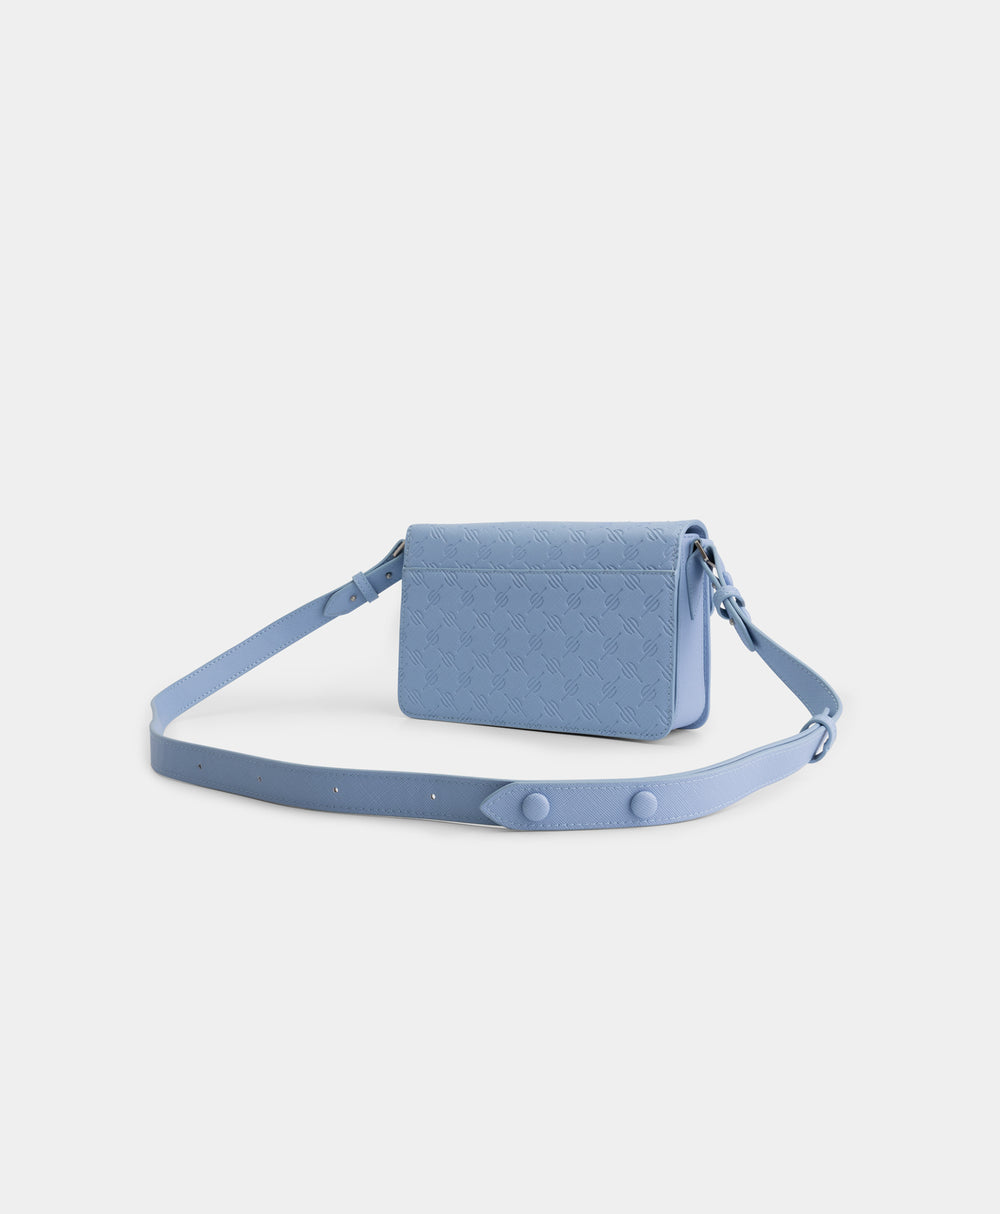 DP - Baby Blue Meru Monogram Bag - Packshot - Rear